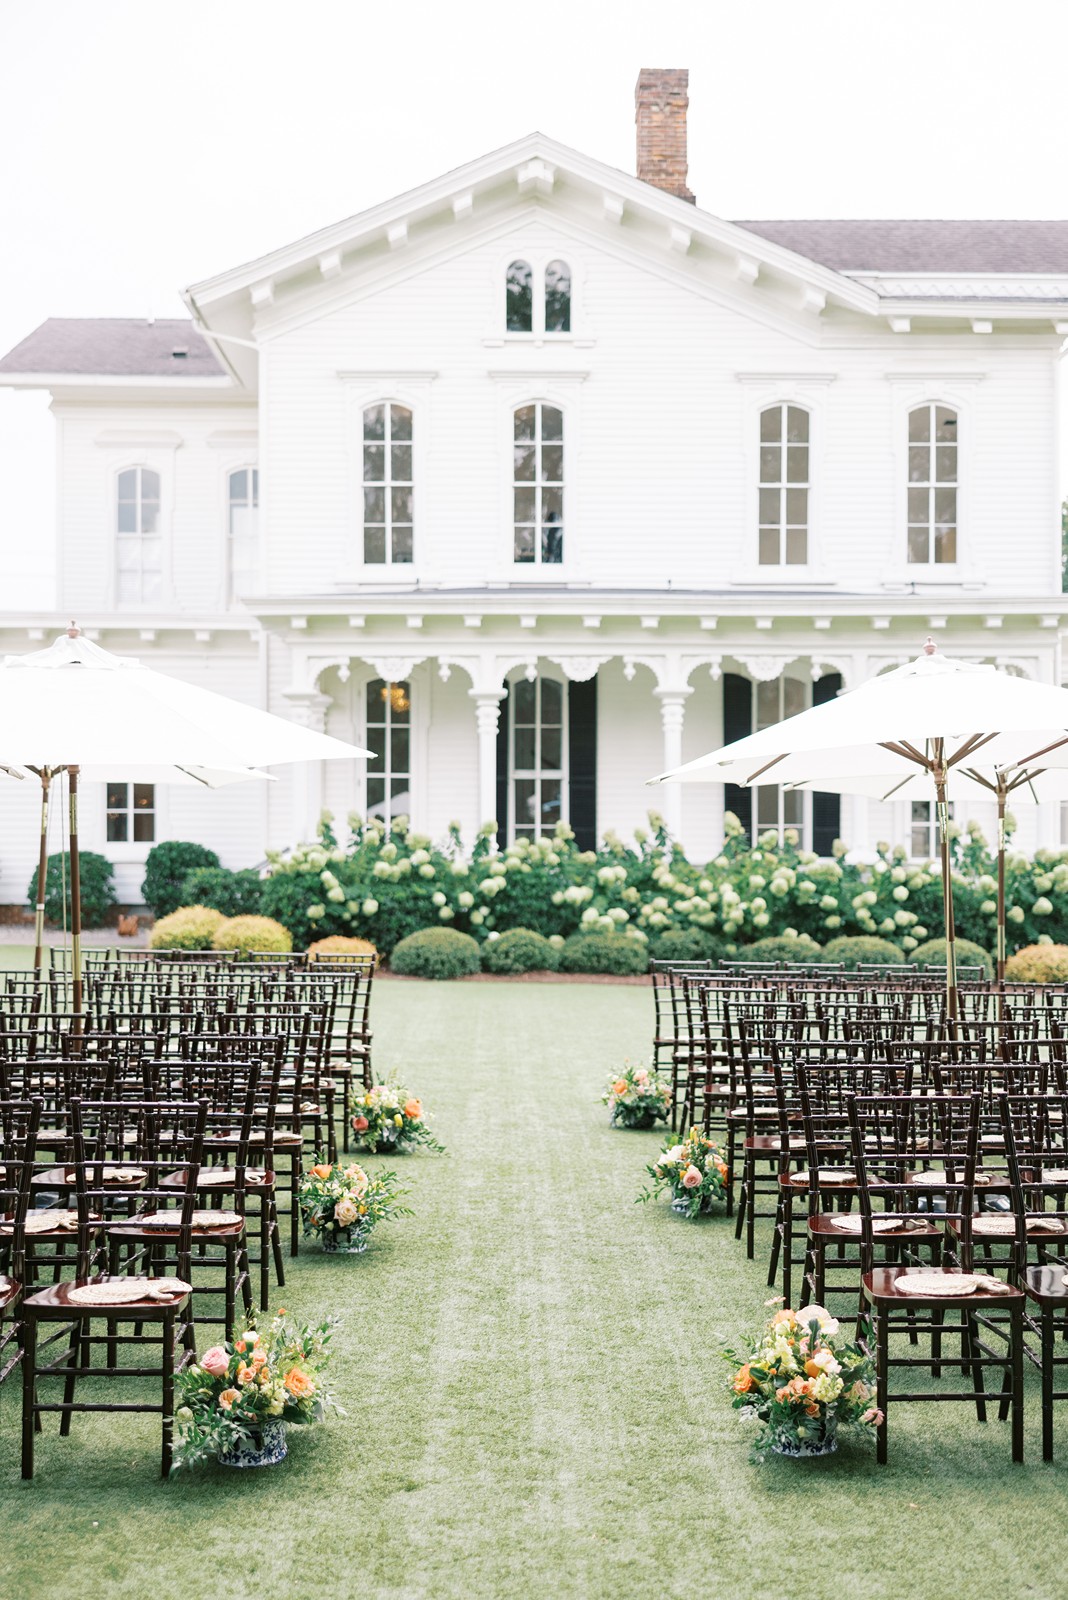 Merrimon-Wynne House lawn for wedding ceremony